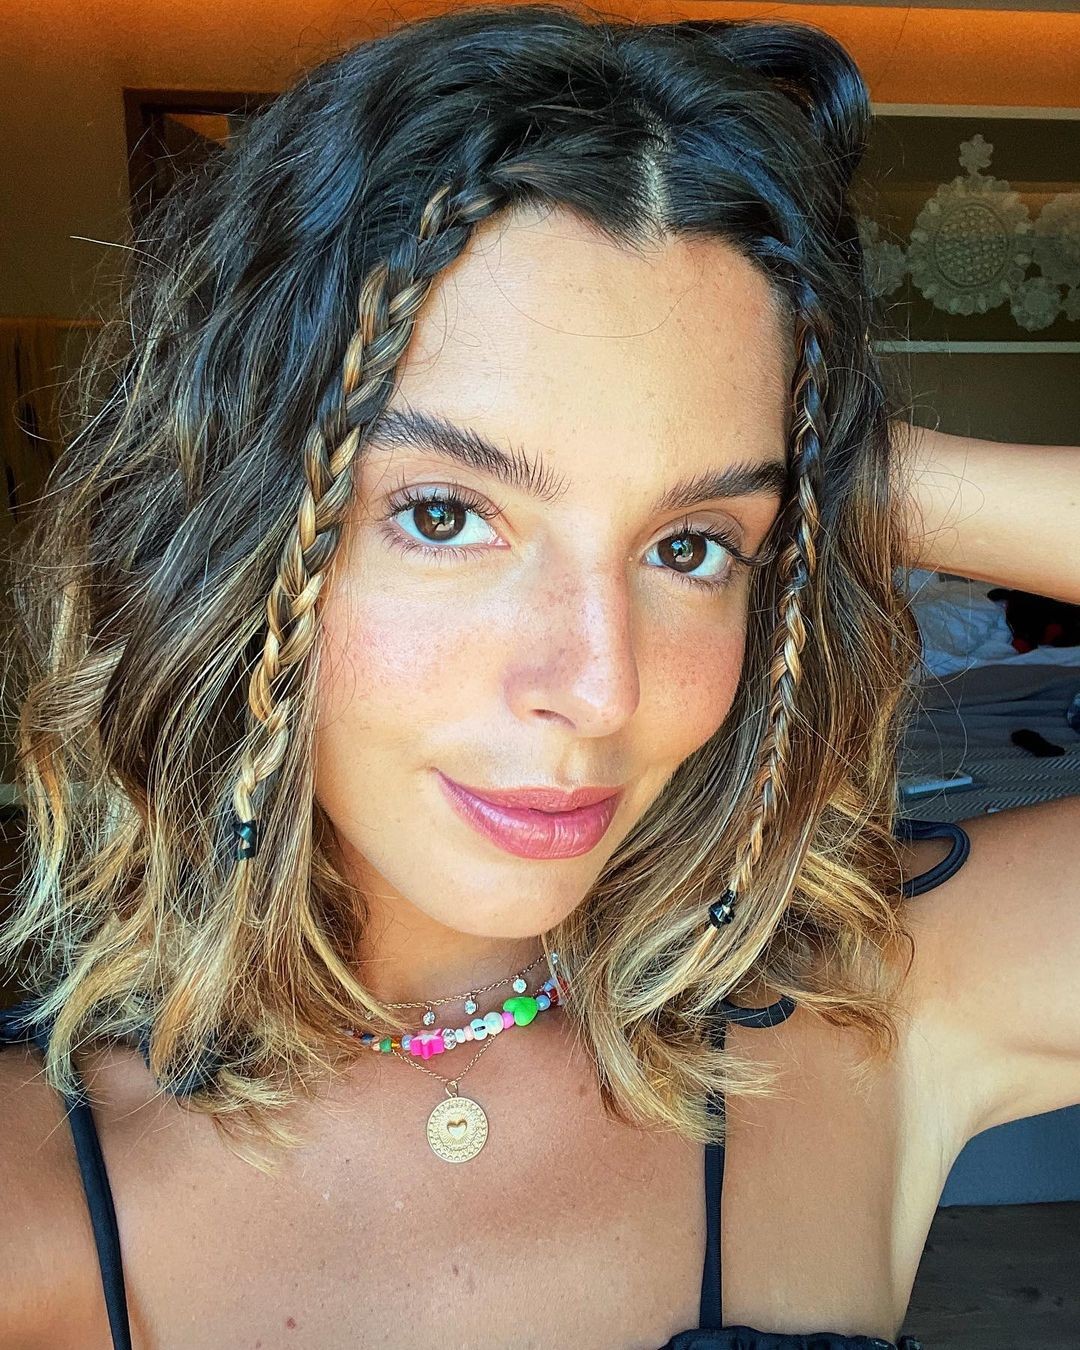 Giovanna Lancellotti (Foto: Reprodução / Instagram)